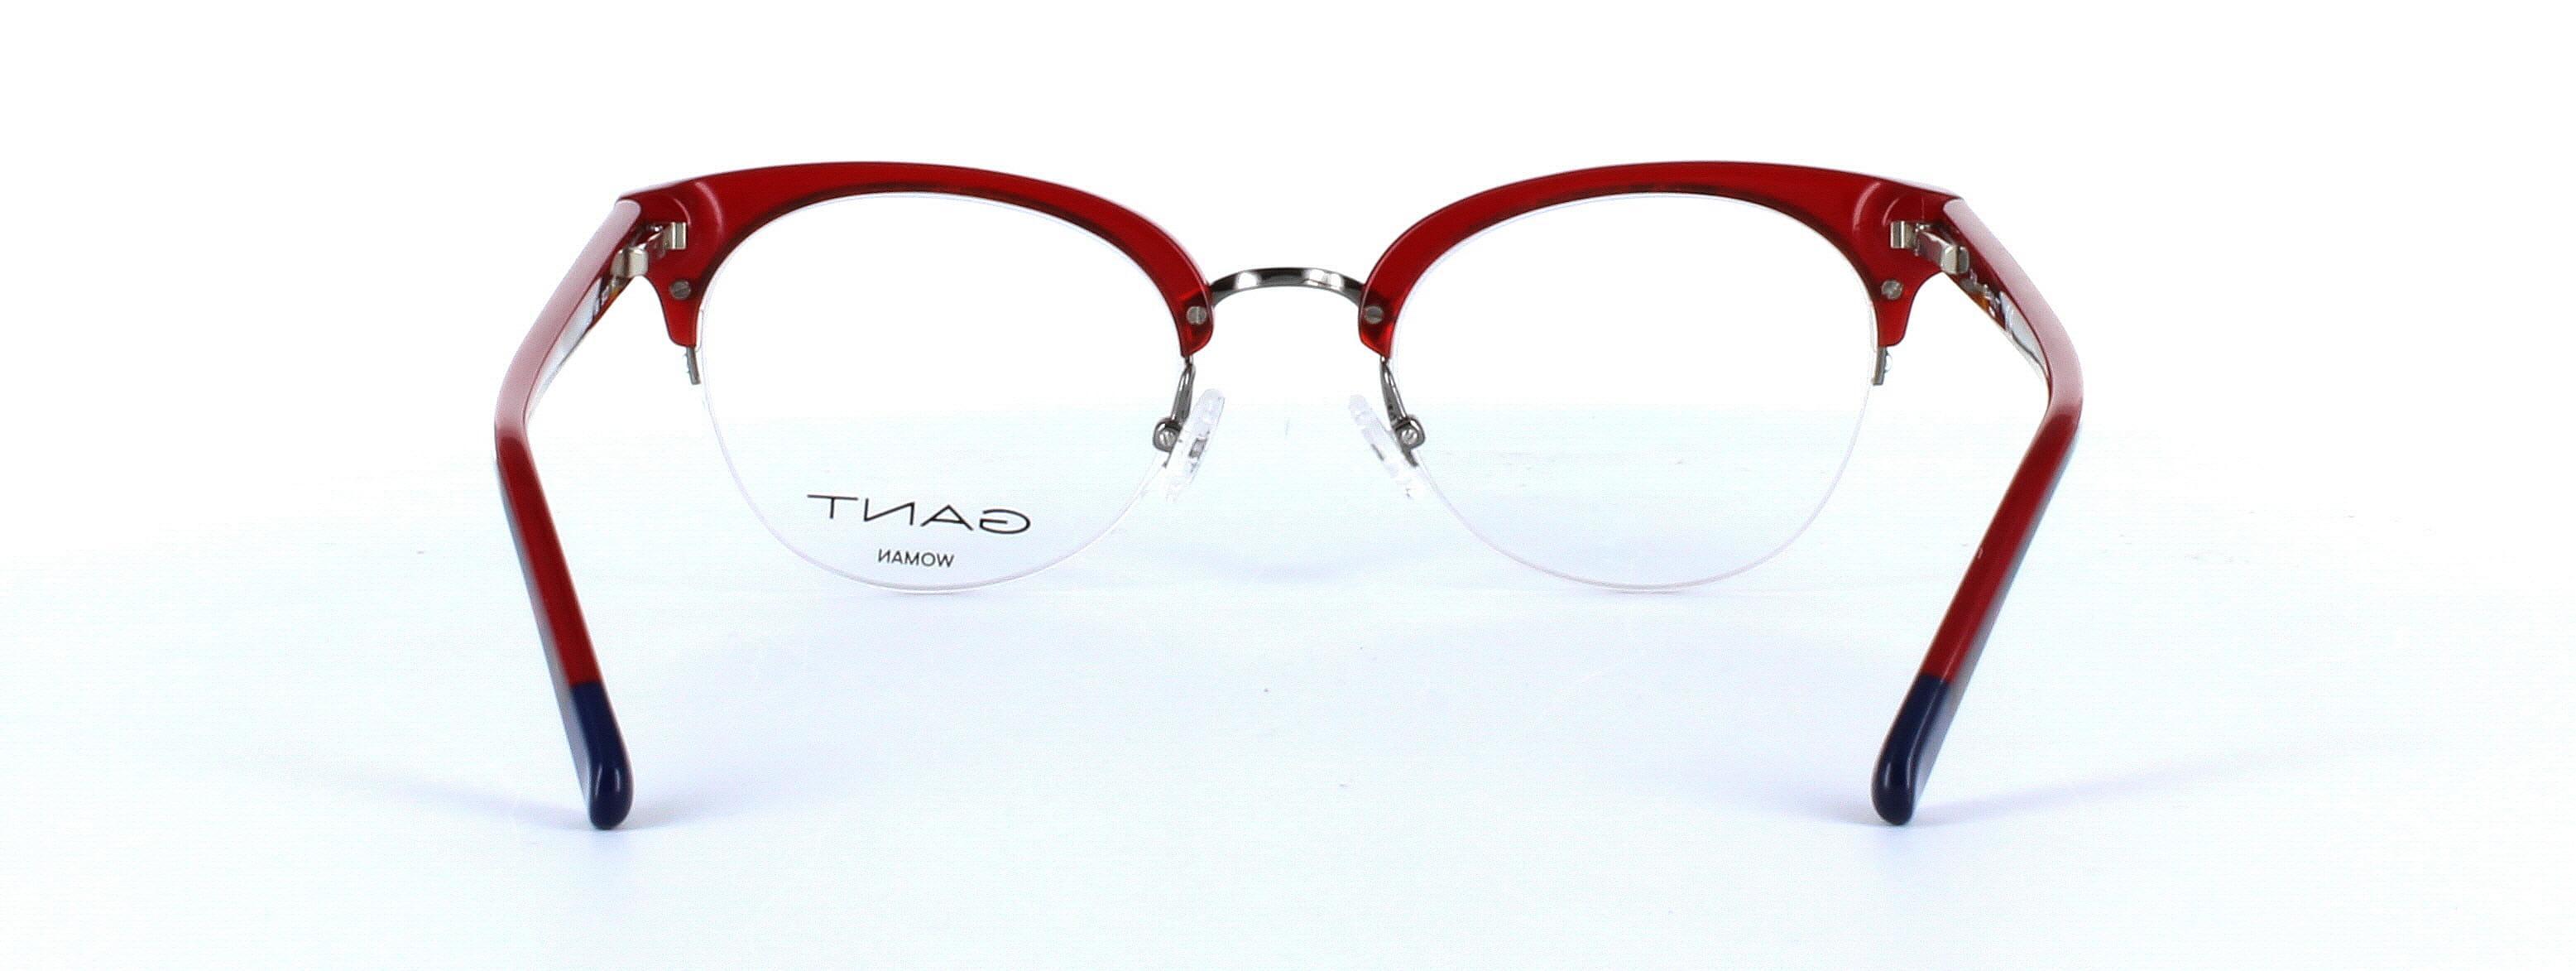 GANT (4085-066) Red Semi Rimless Round Acetate Glasses - Image View 3